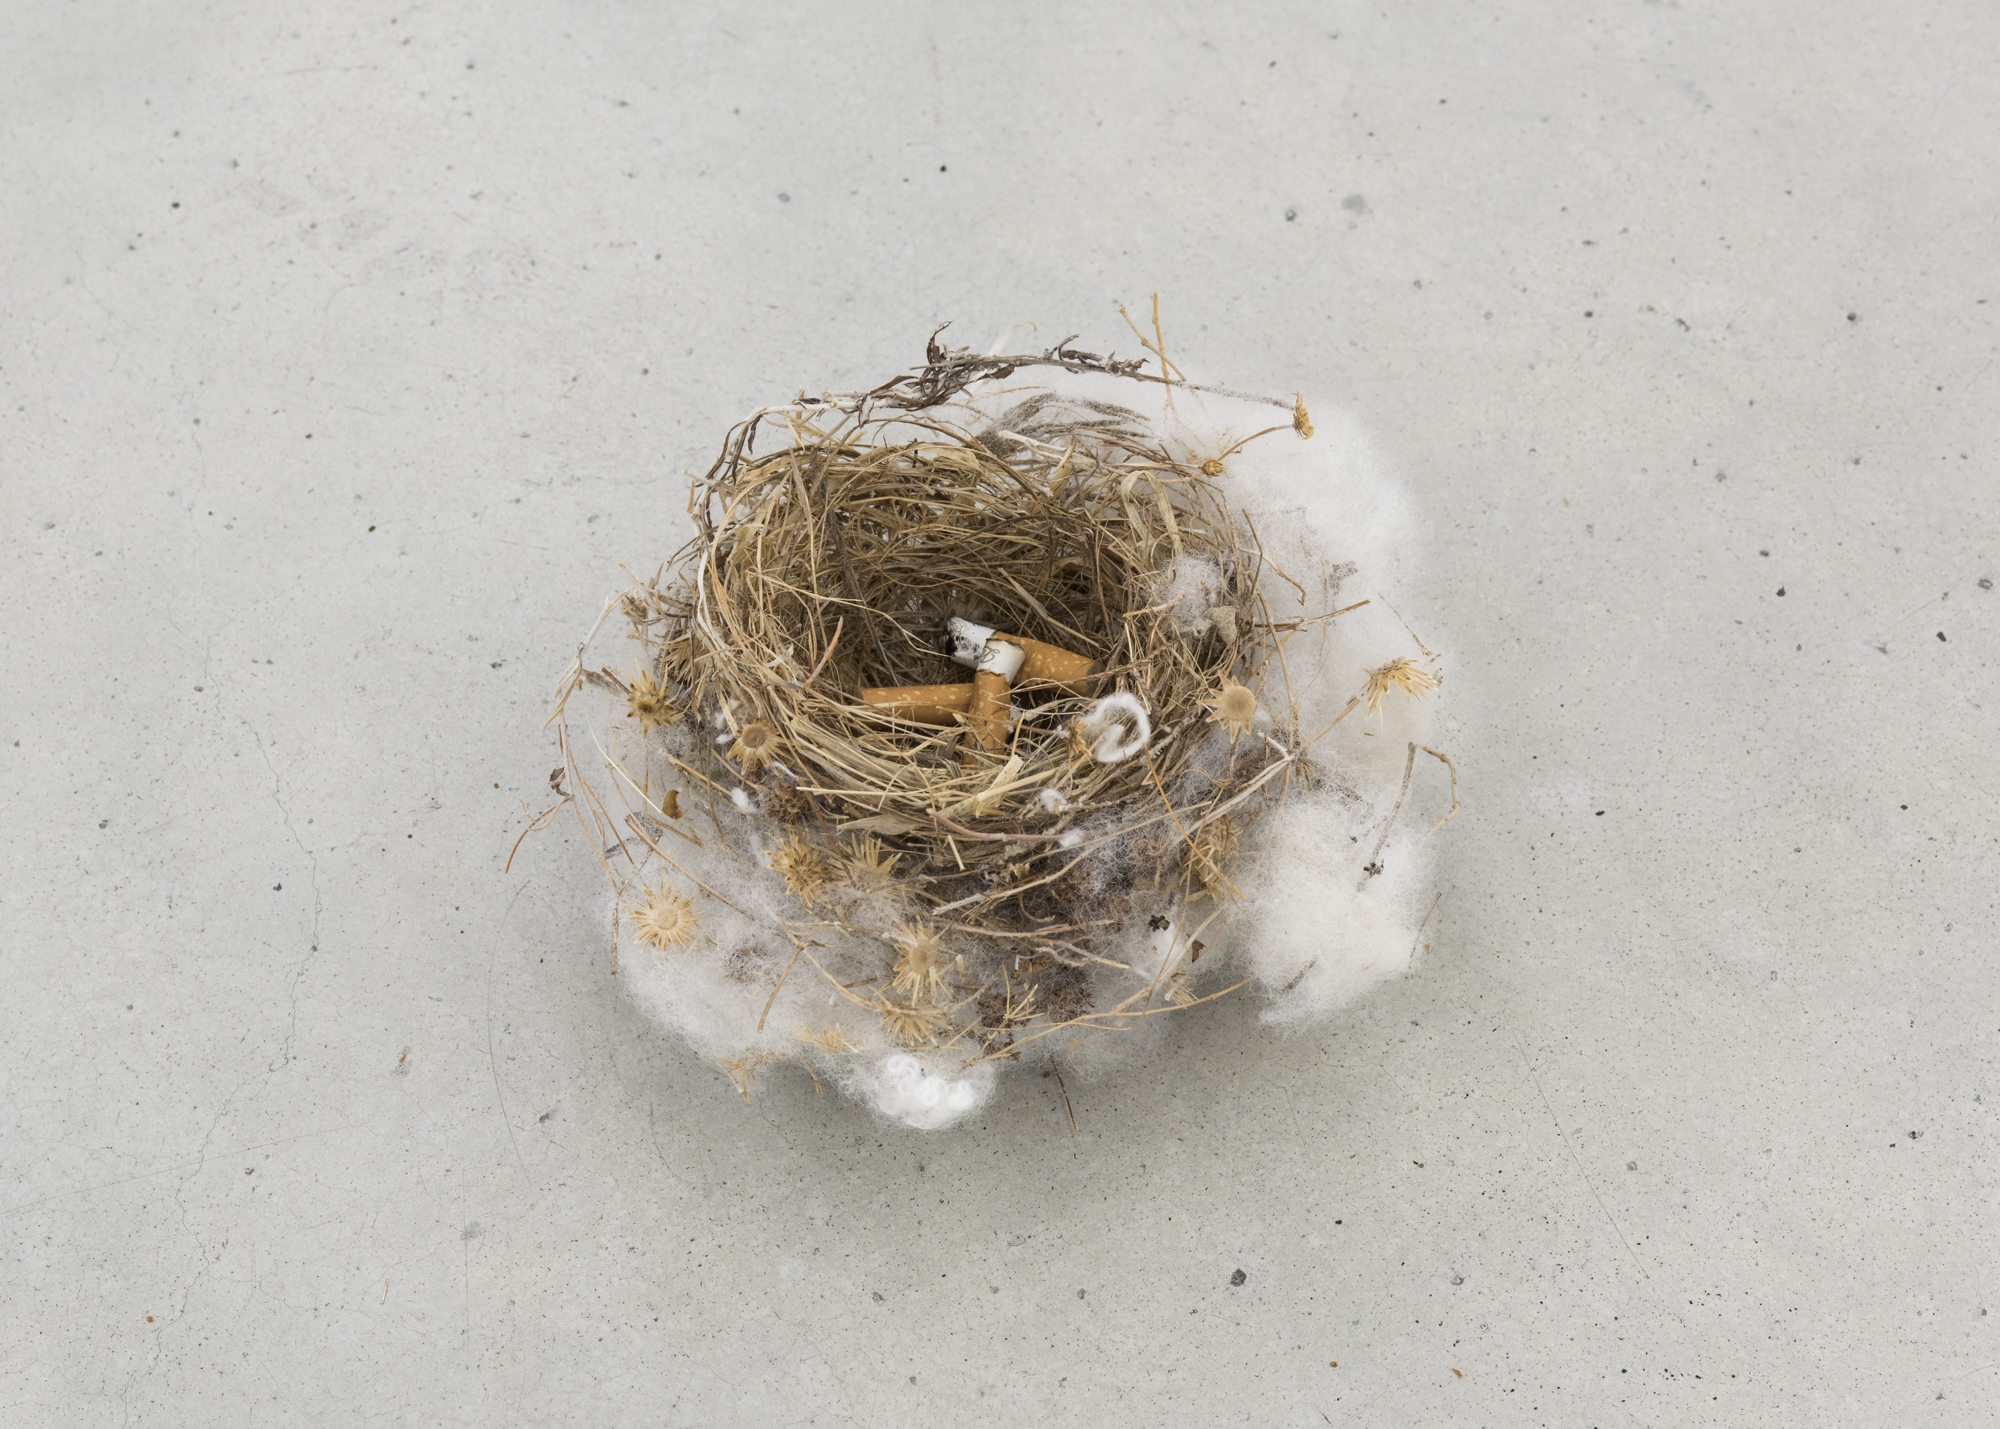 Ariel Schlesinger, Untitled (nest), 2017, Bulbul nest, cigarette buds, variable dimensions